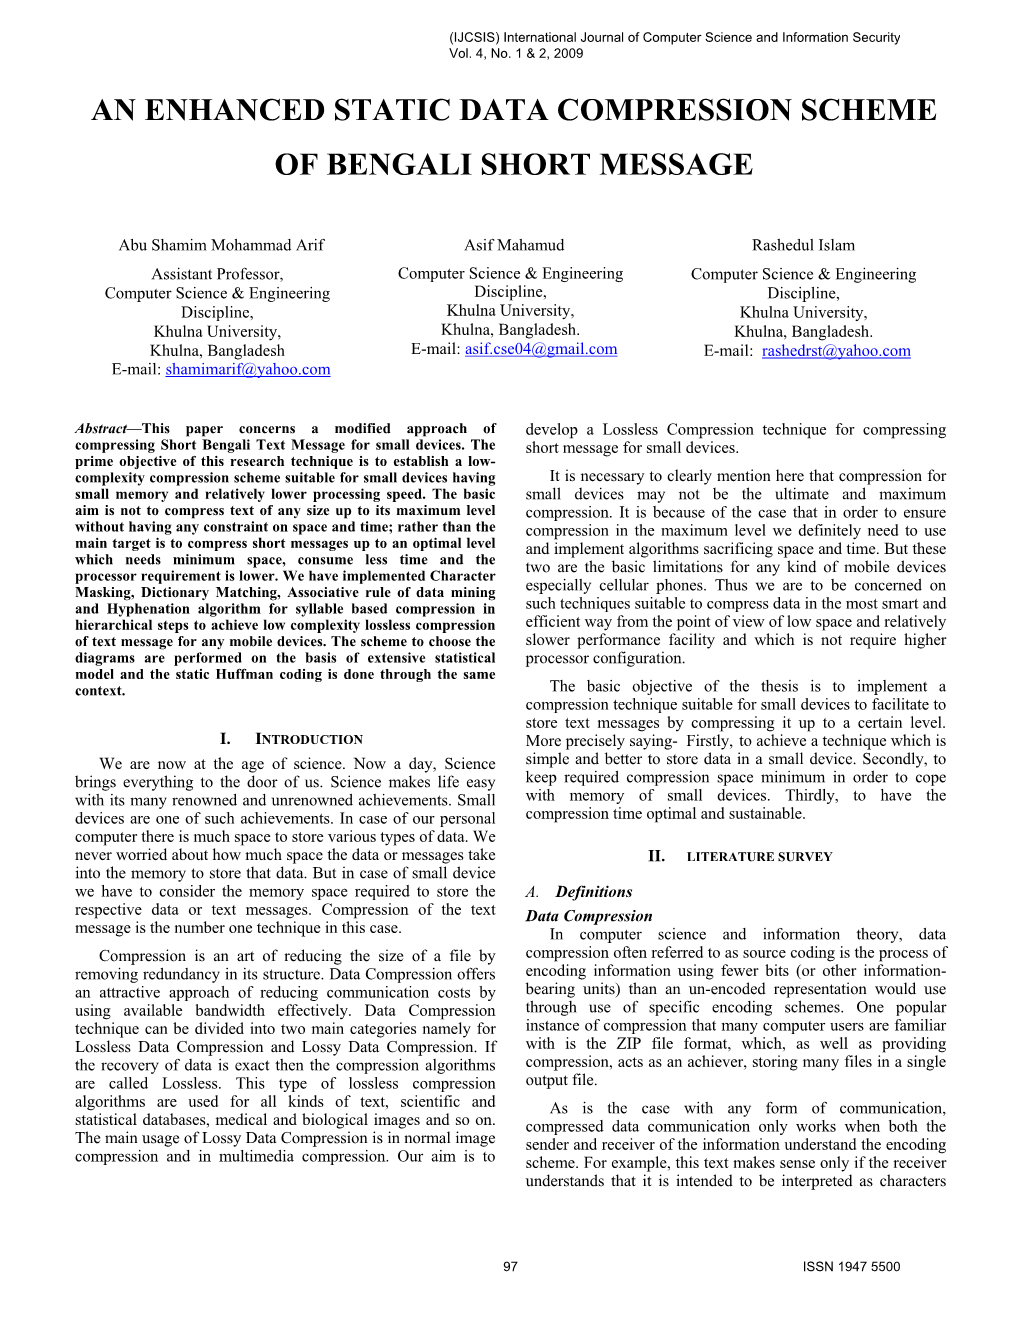 An Enhanced Static Data Compression Scheme of Bengali Short Message